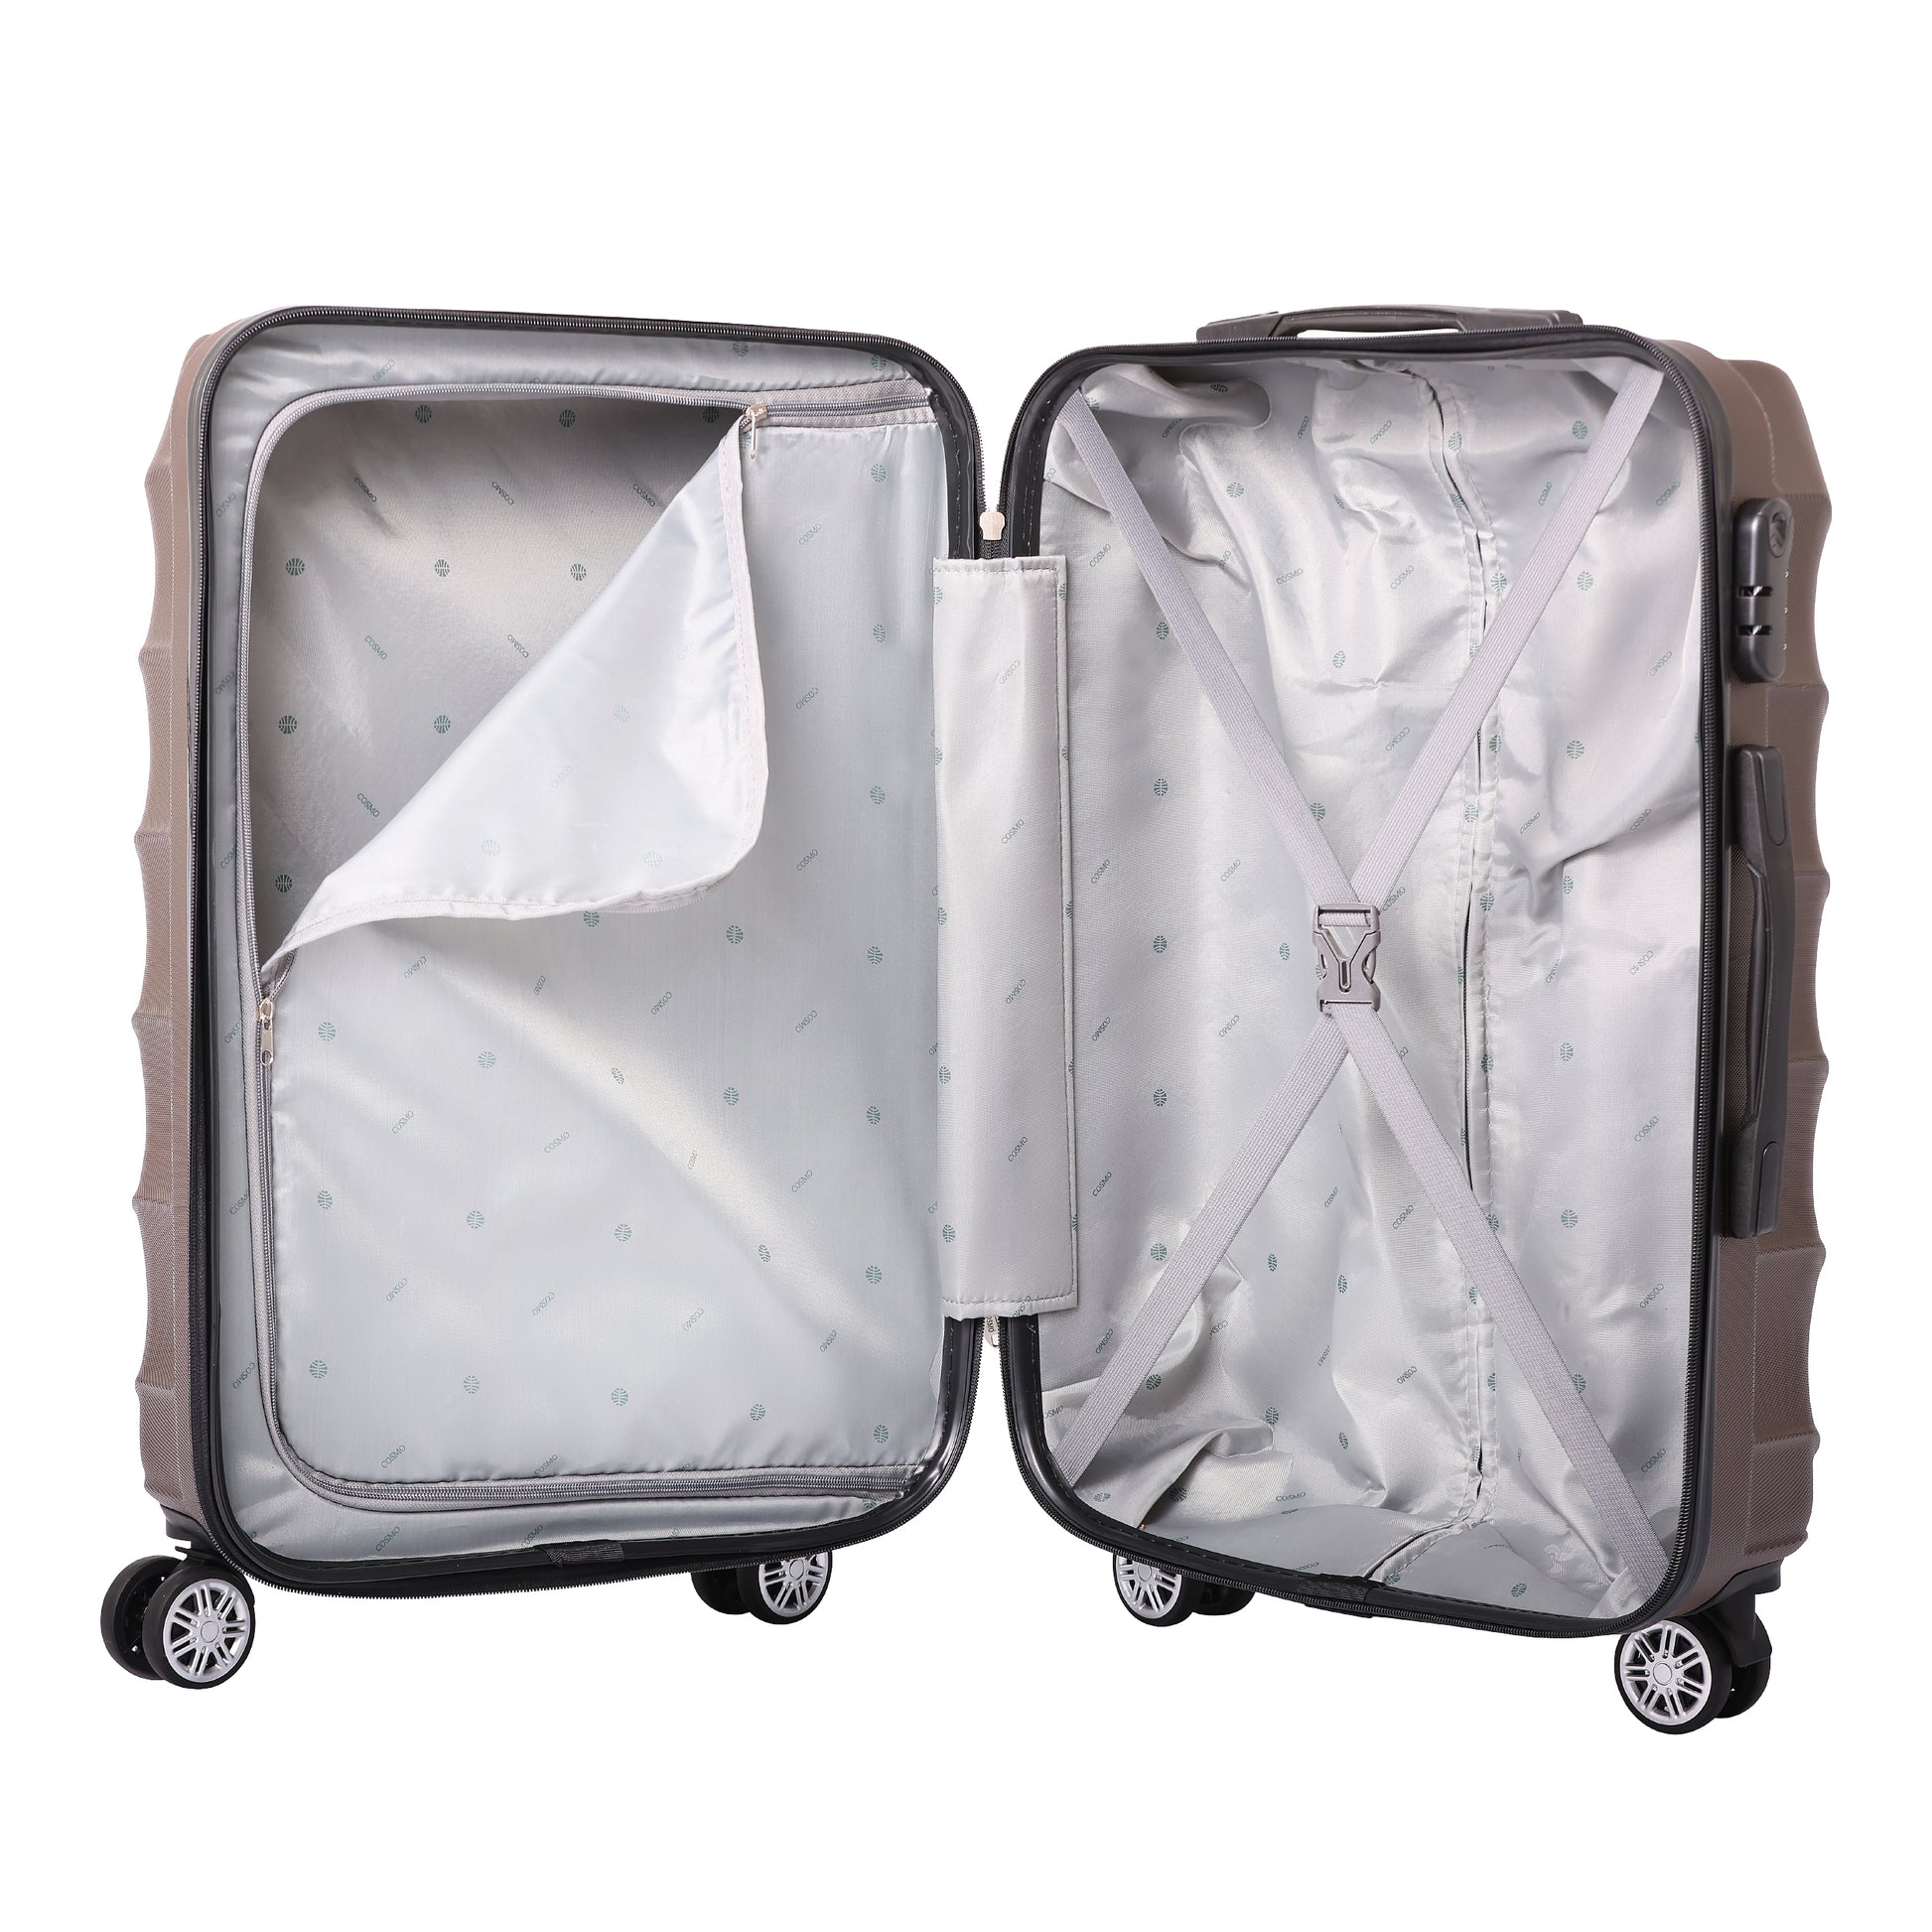 Cosmo Vector 4W 50 cm Hard Luggage Trolley Case